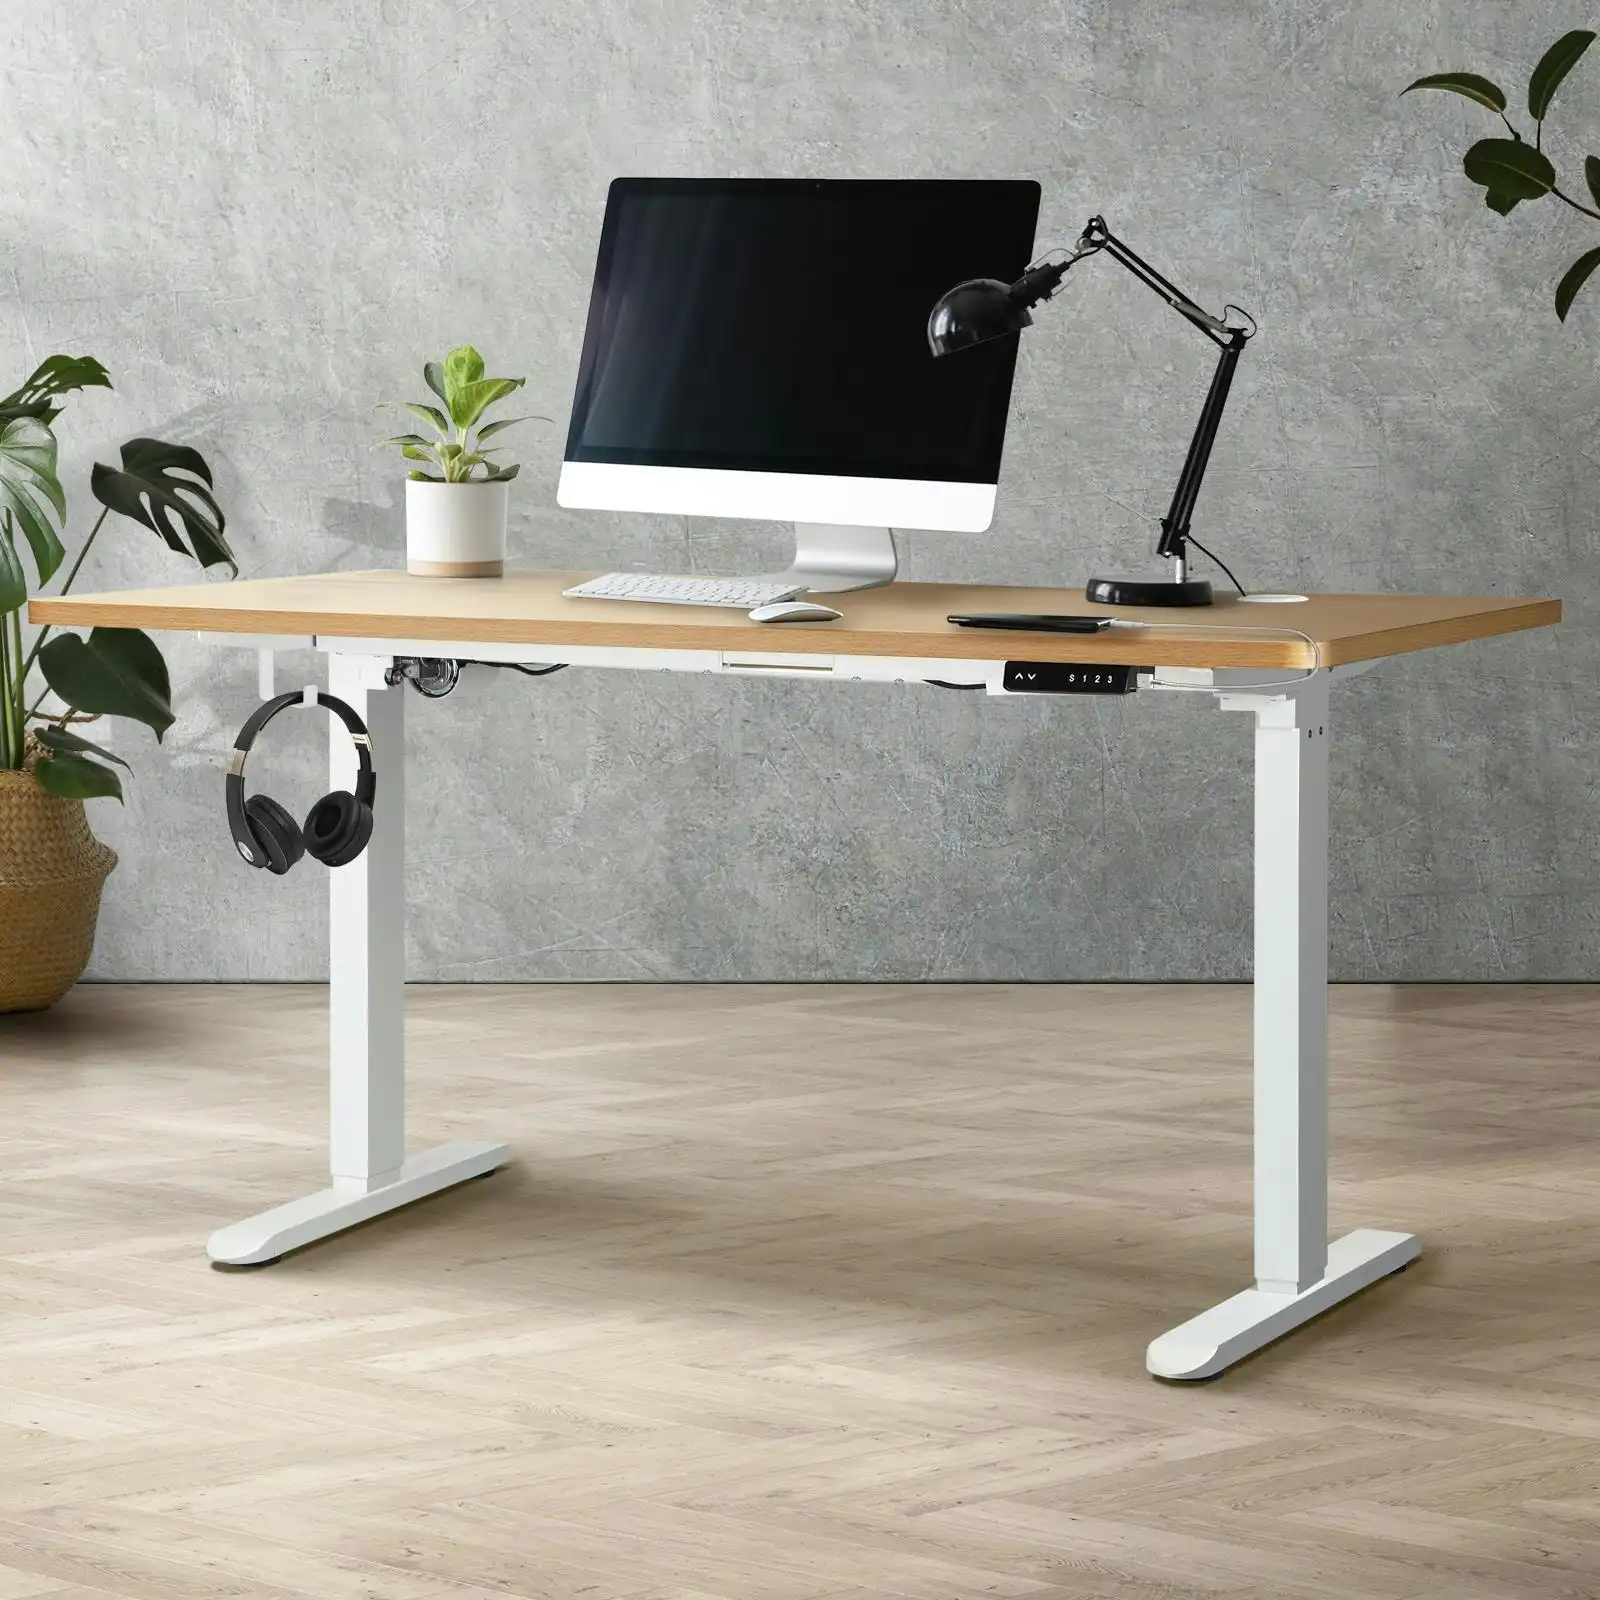 Oikiture 140cm Electric Standing Desk Single Motor White Frame OAK Desktop With USB&Type C Port